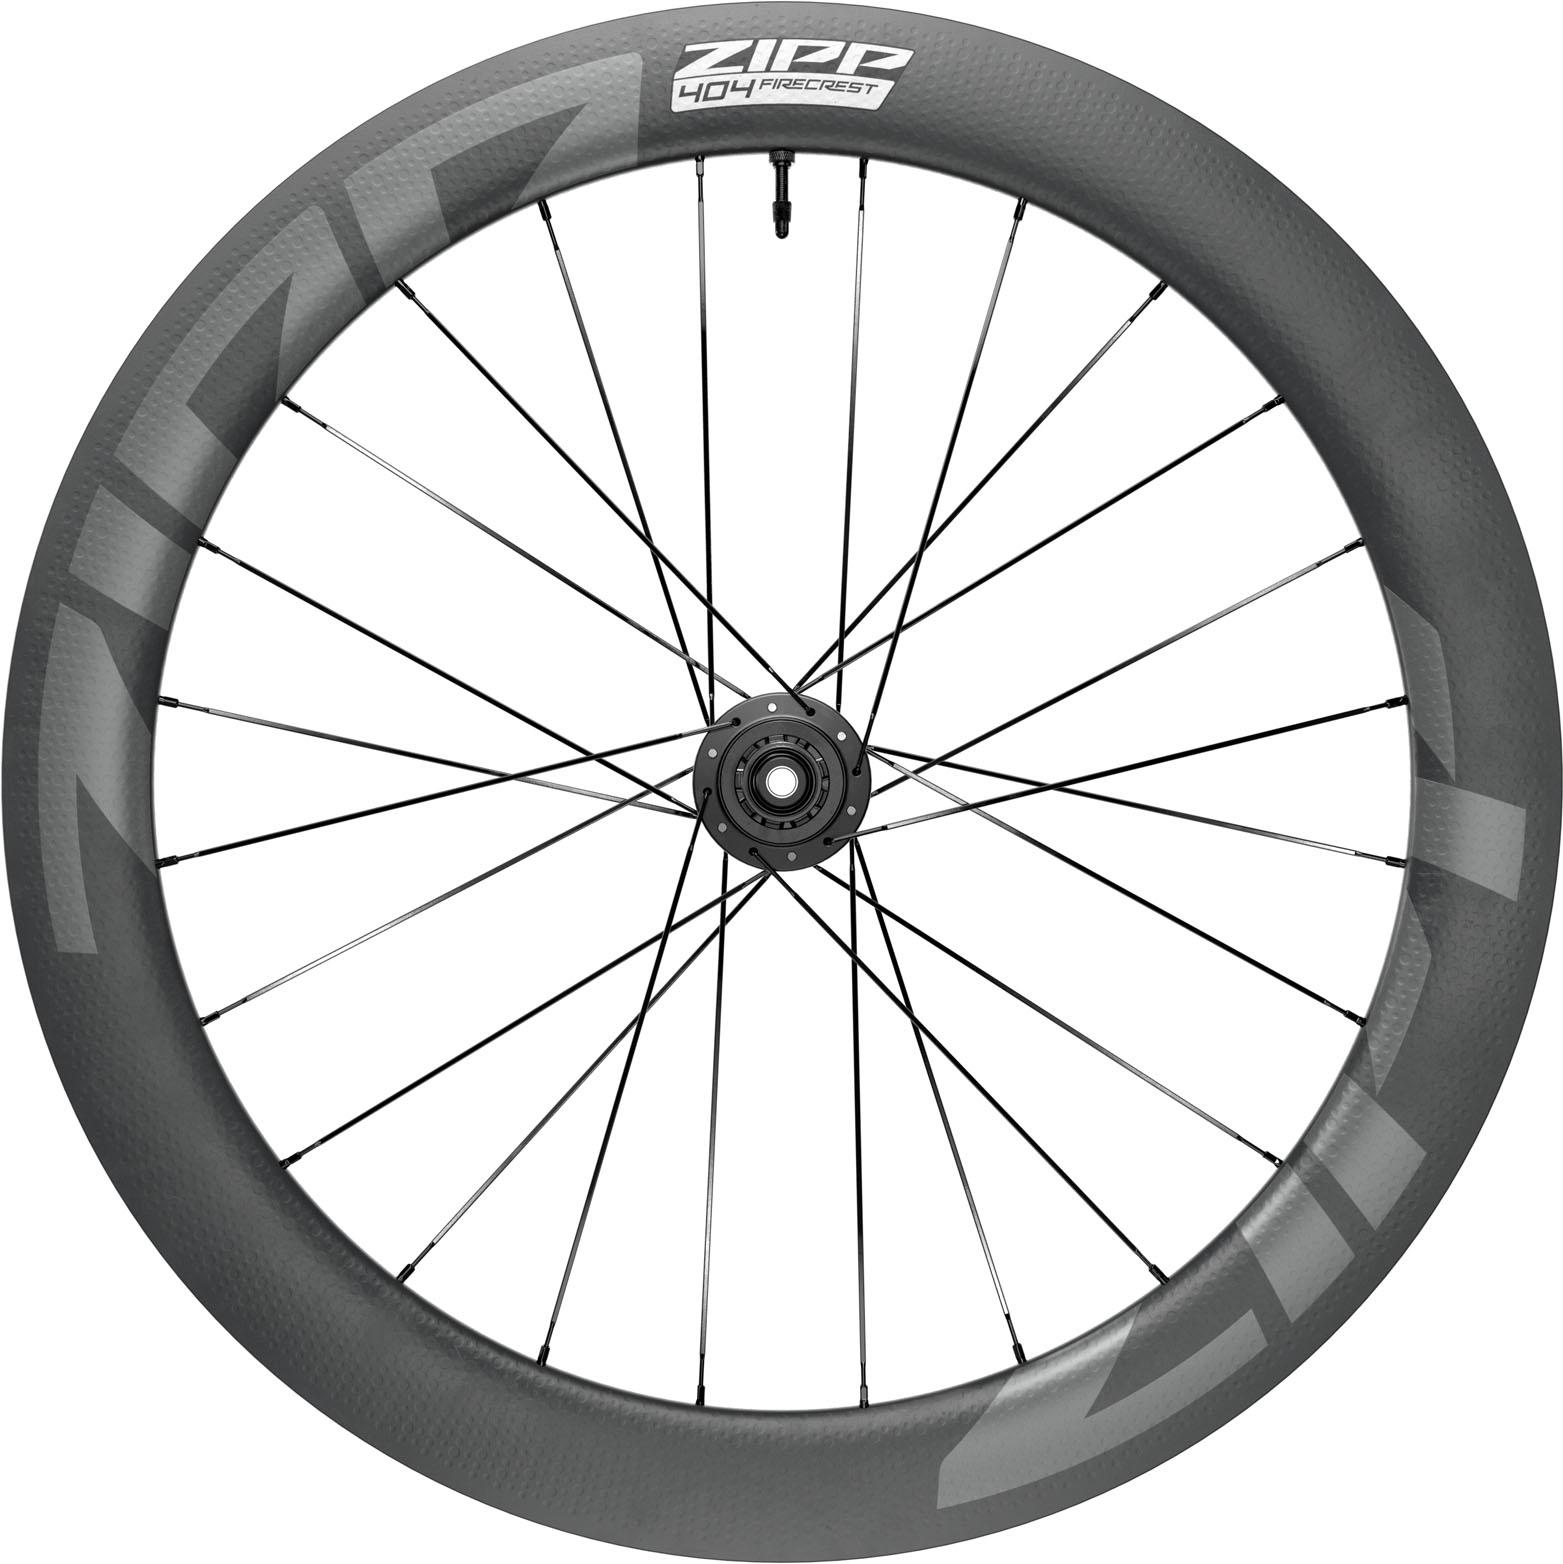 Zipp 404 Firecrest Carbon Tl Disc Rear Wheel 2021  Carbon